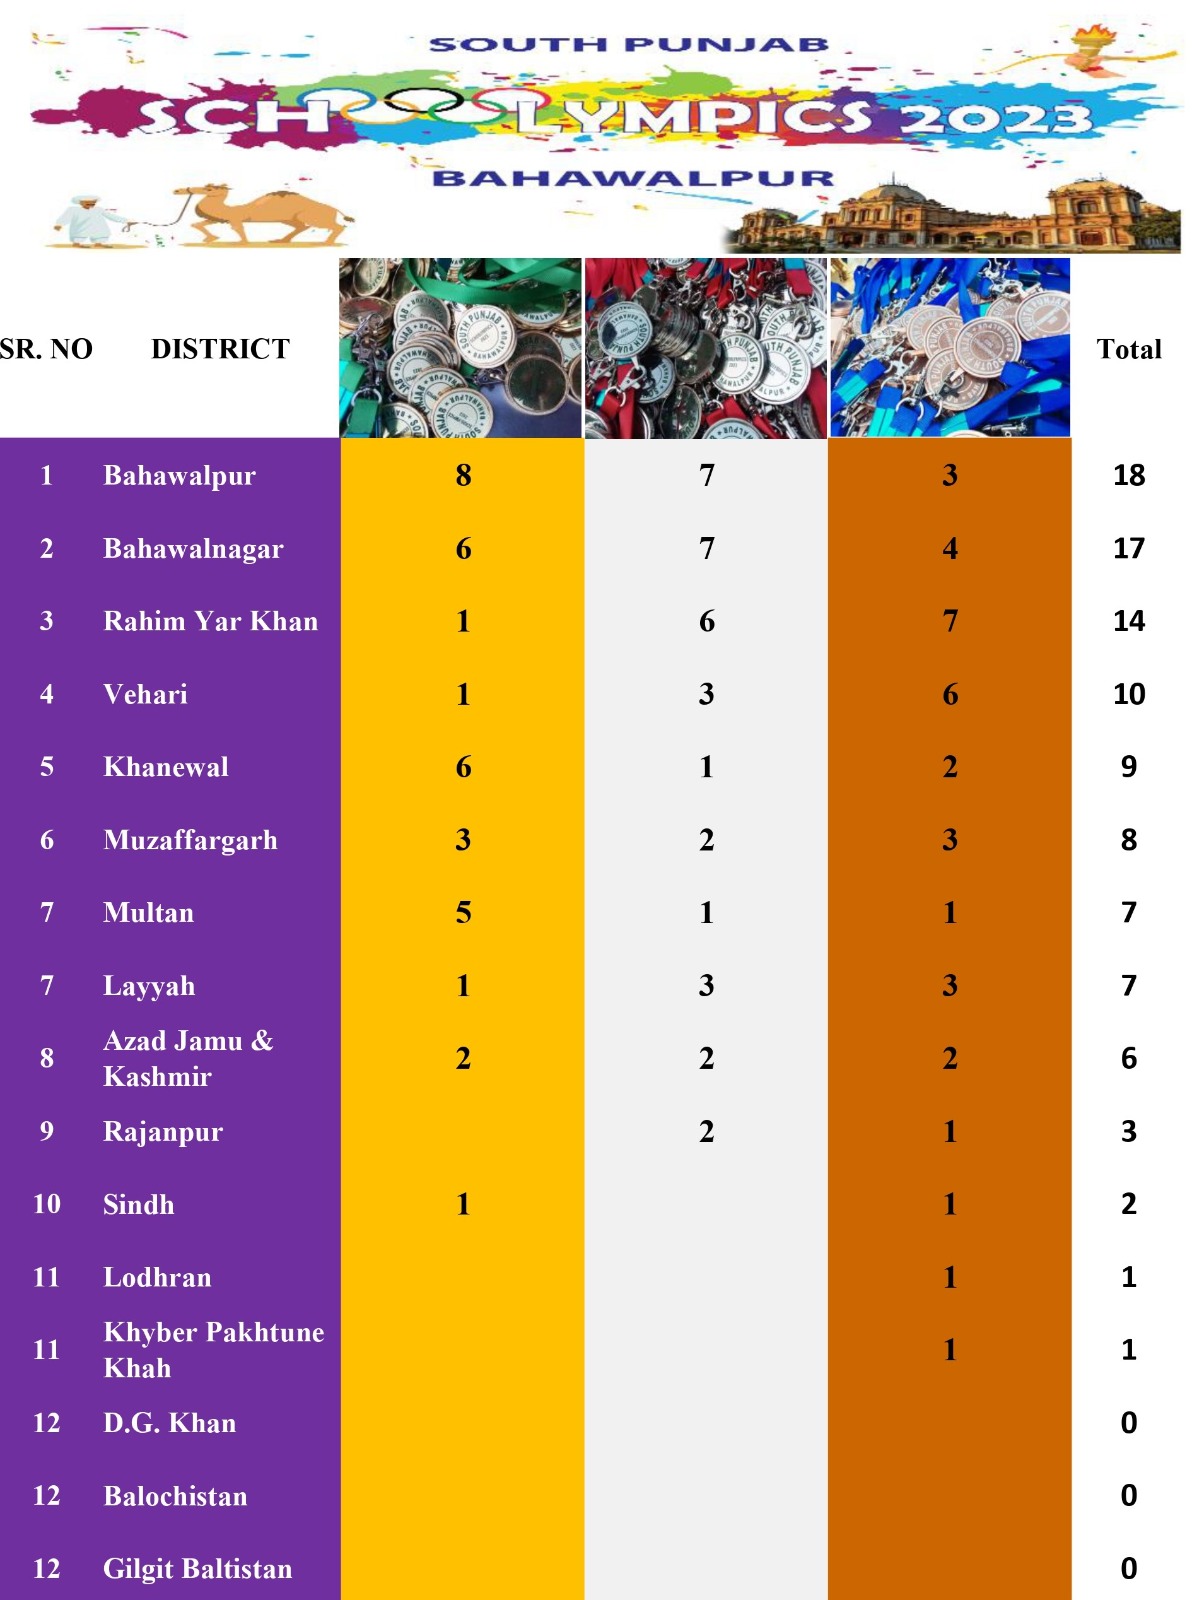 District Ranking in  South Punjab Schoolympics 2023 Bahawalpur